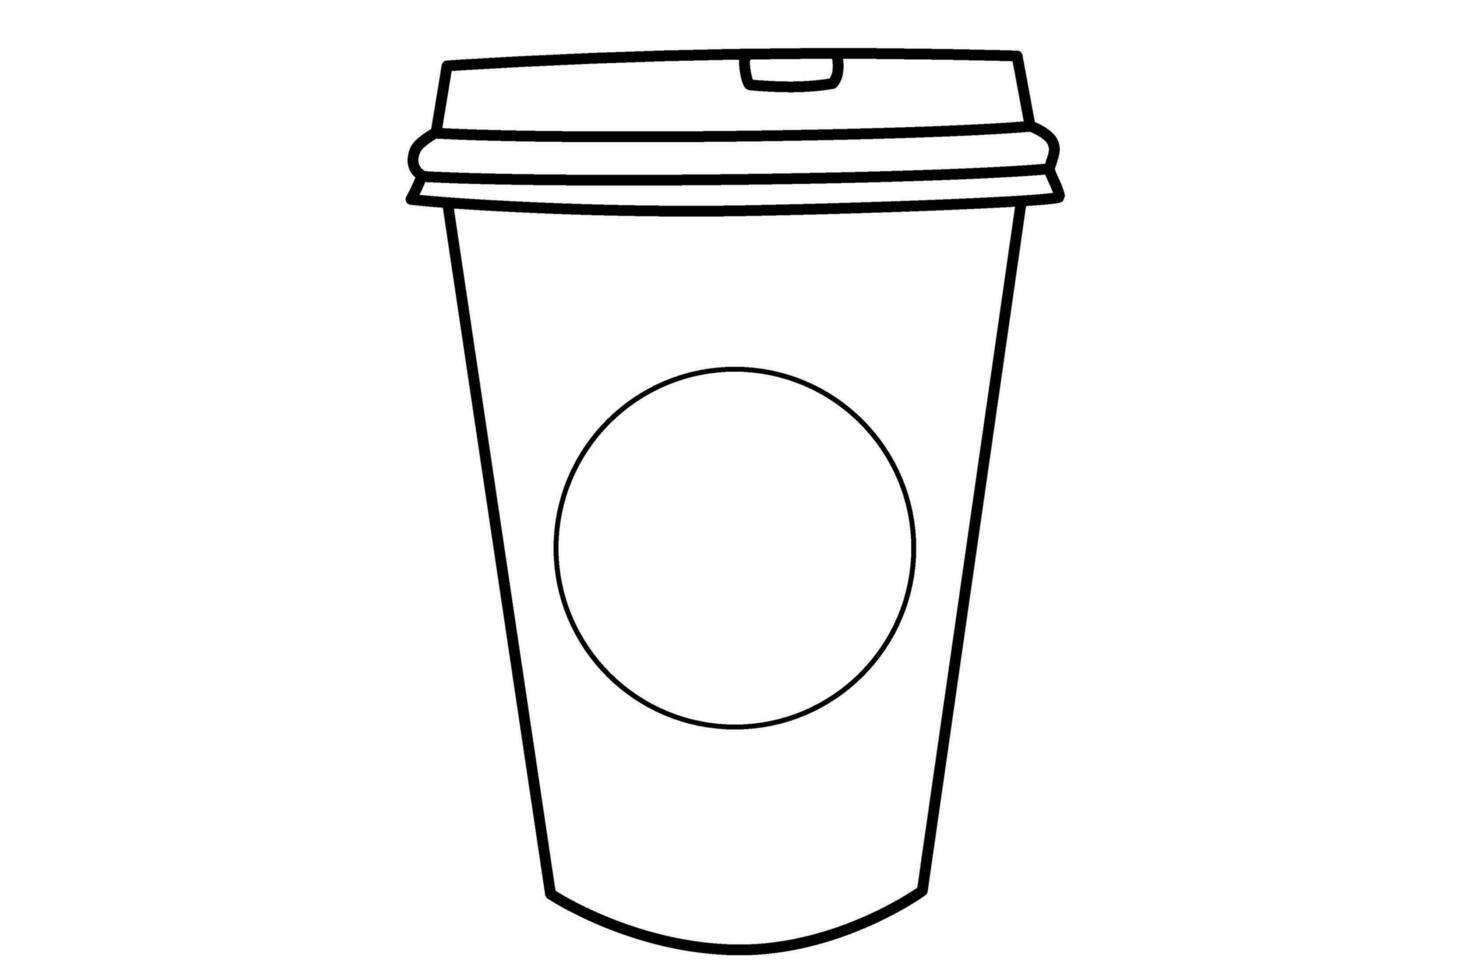 café tasse ligne art haricot boisson illustration vecteur